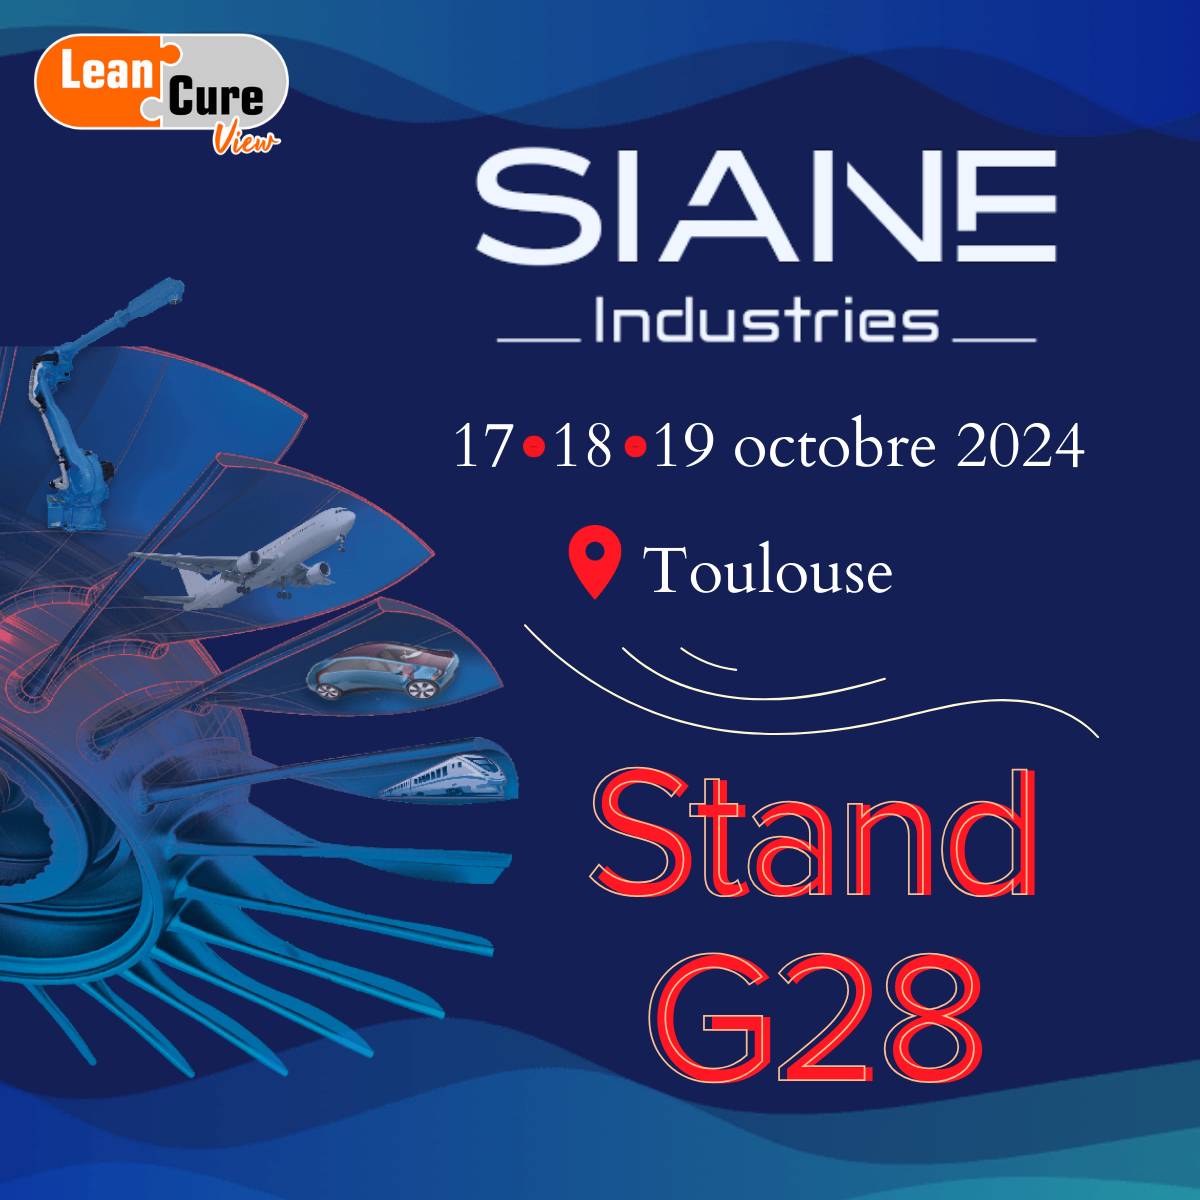 Salon Siane Industries Toulouse 2024